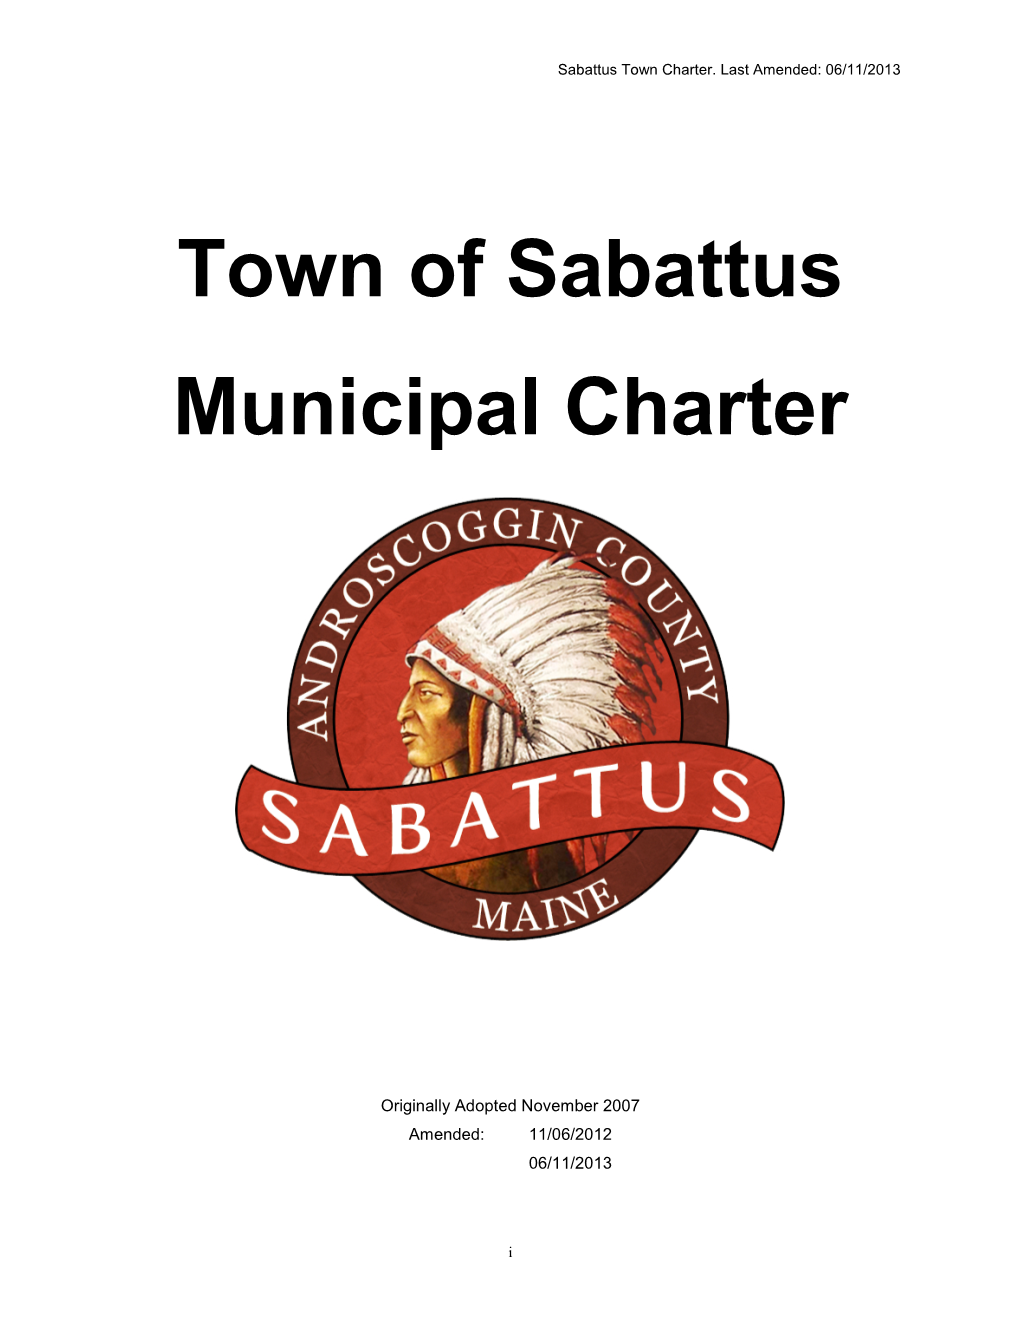 Town of Sabattus Municipal Charter